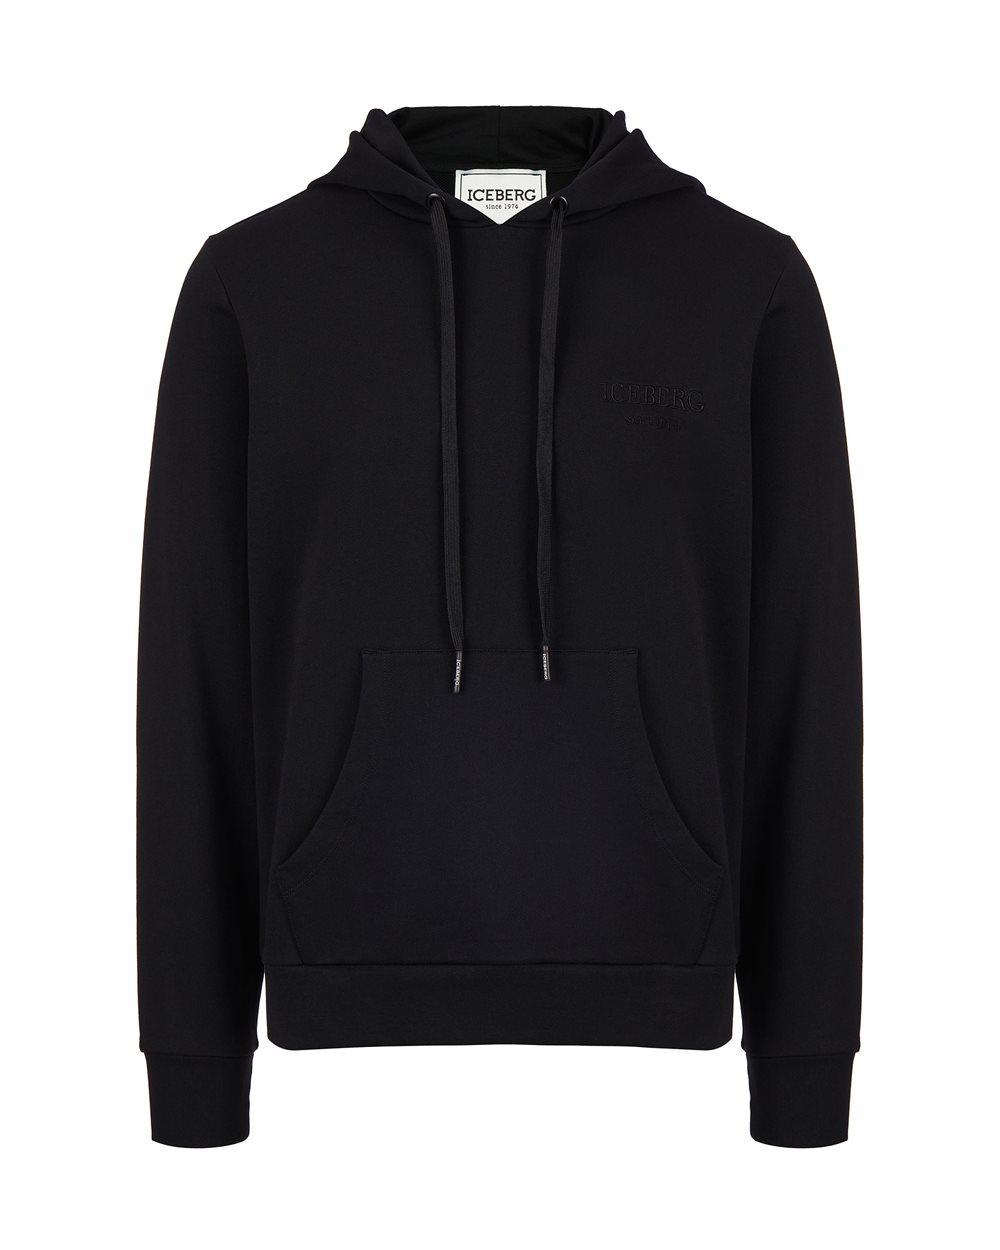 Sweatshirt with hood and logo - Carryover | Iceberg - Official Website